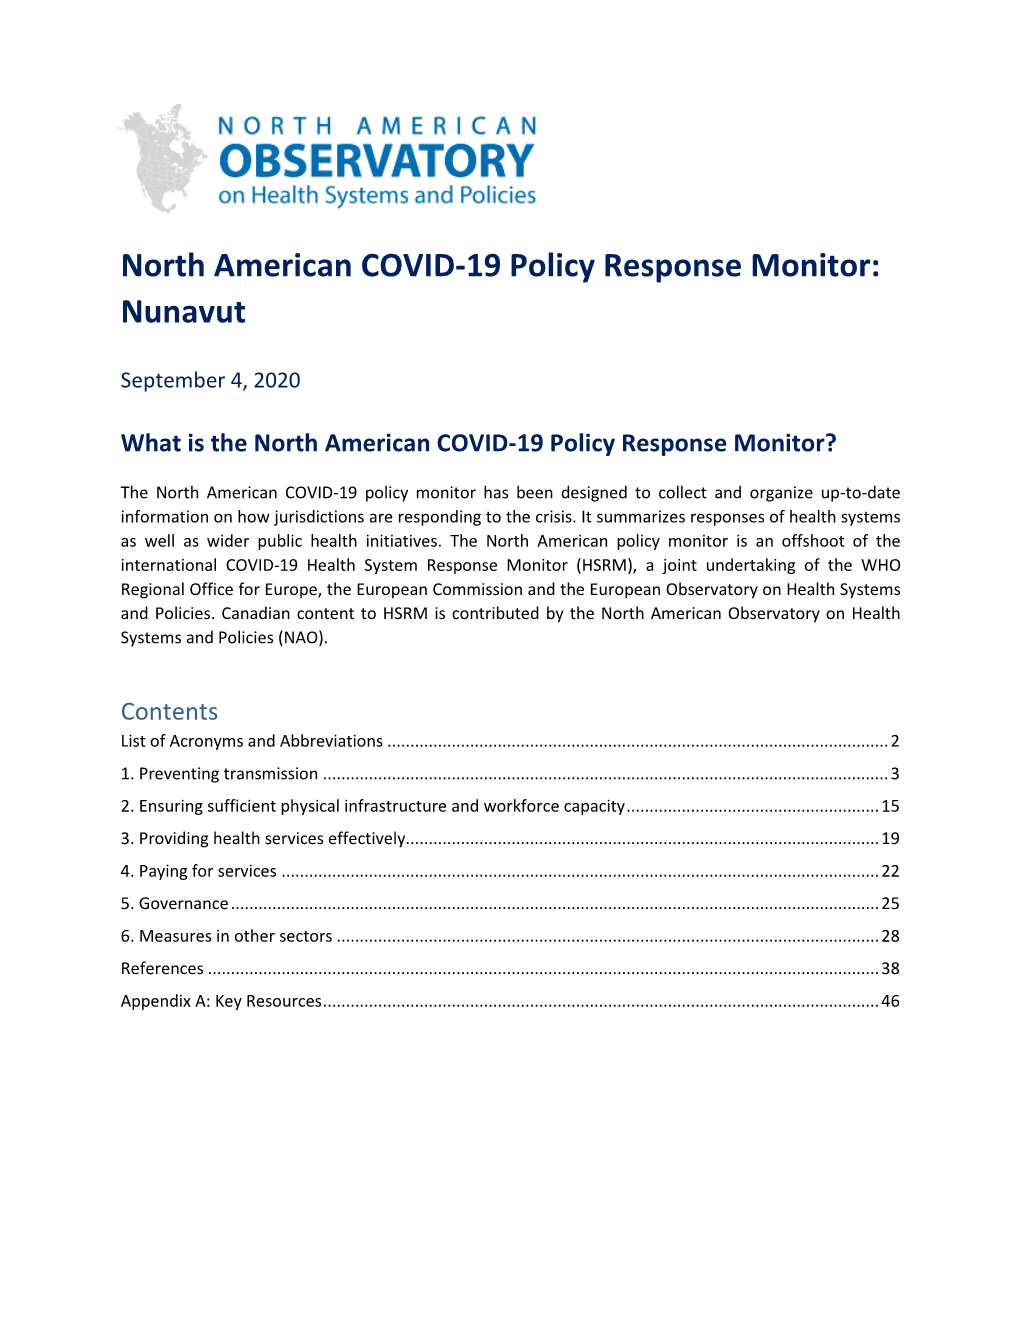 North American COVID-19 Policy Response Monitor: Nunavut